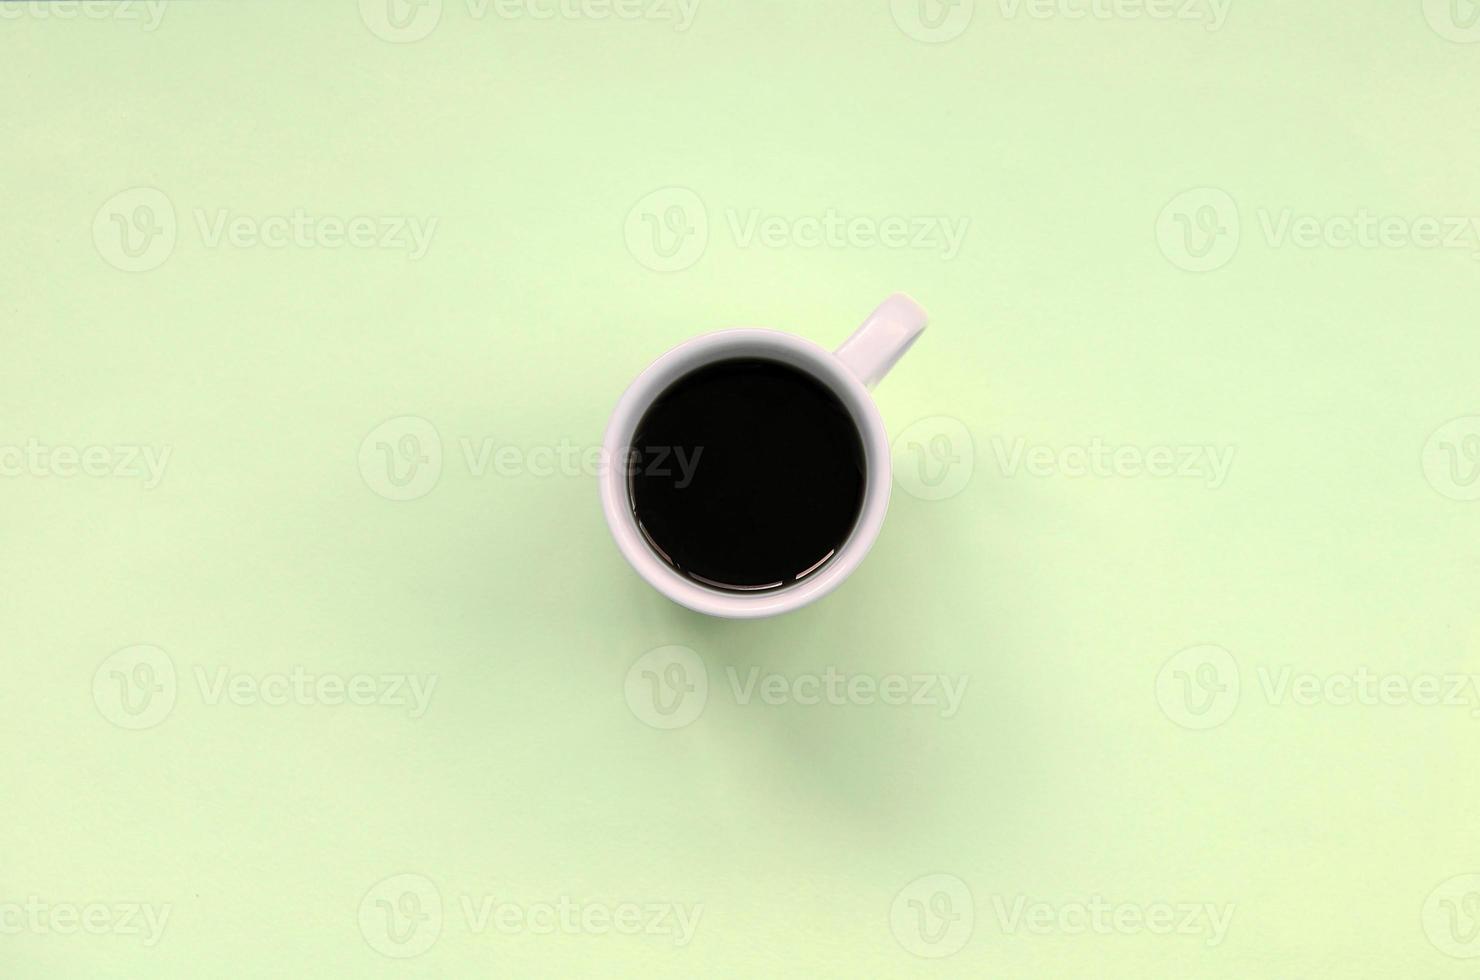 pequena xícara de café branco sobre fundo de textura de papel de cor de limão pastel de moda foto